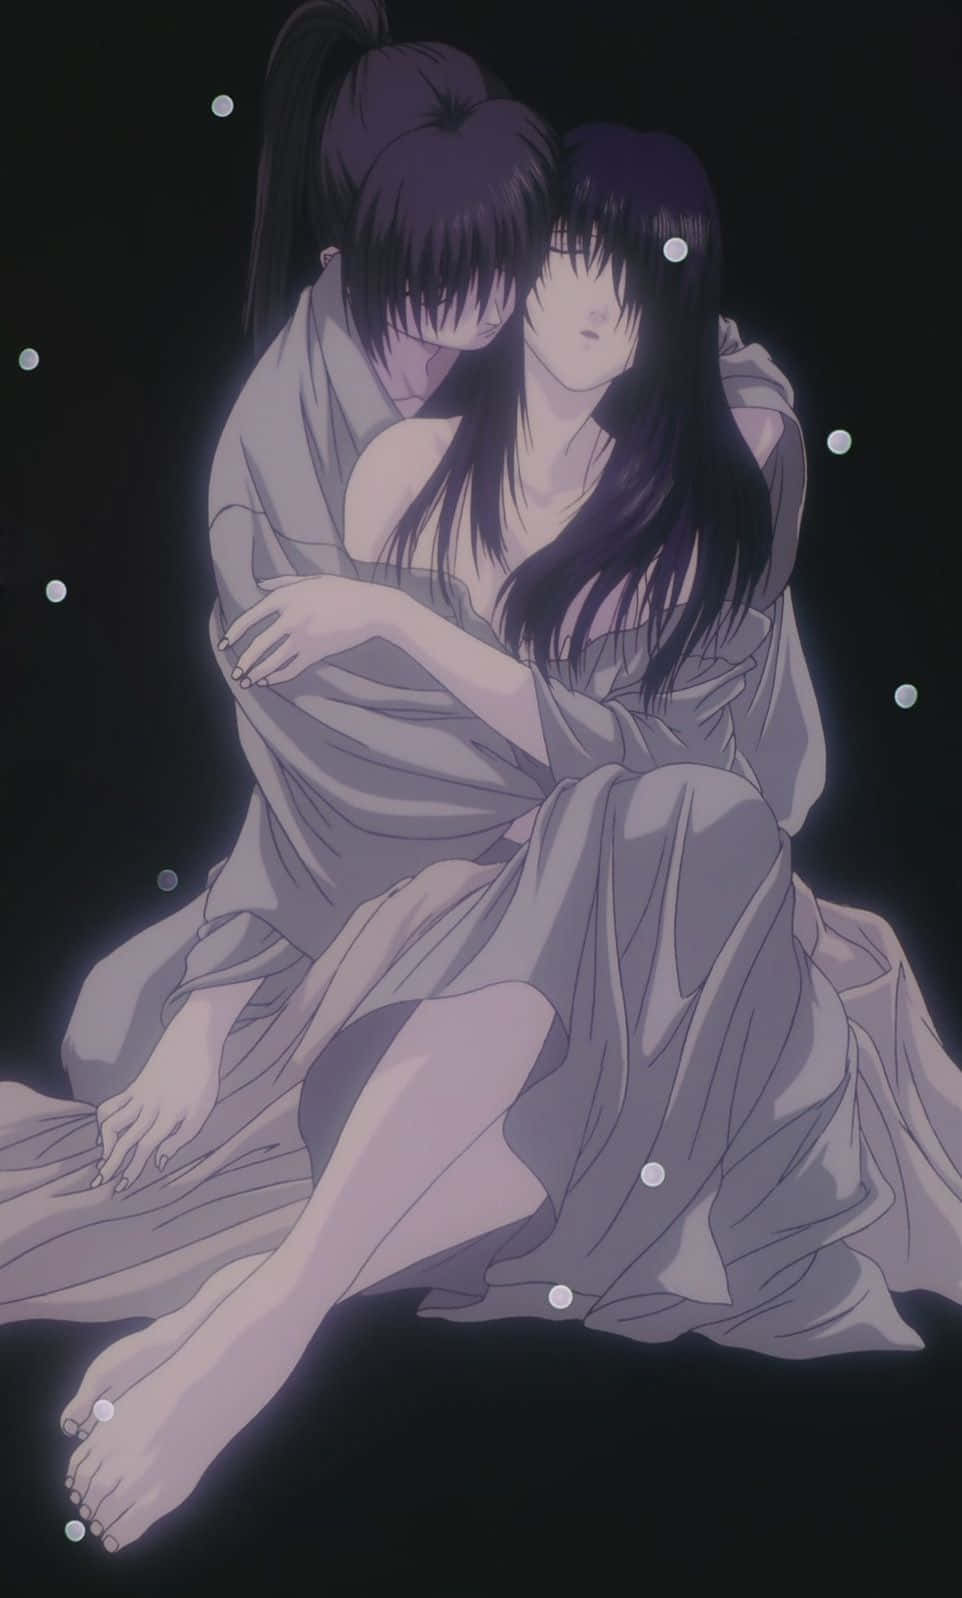 Romantic Moment Between Kenshin And Kaoru From The Anime Rurouni Kenshin Wallpaper